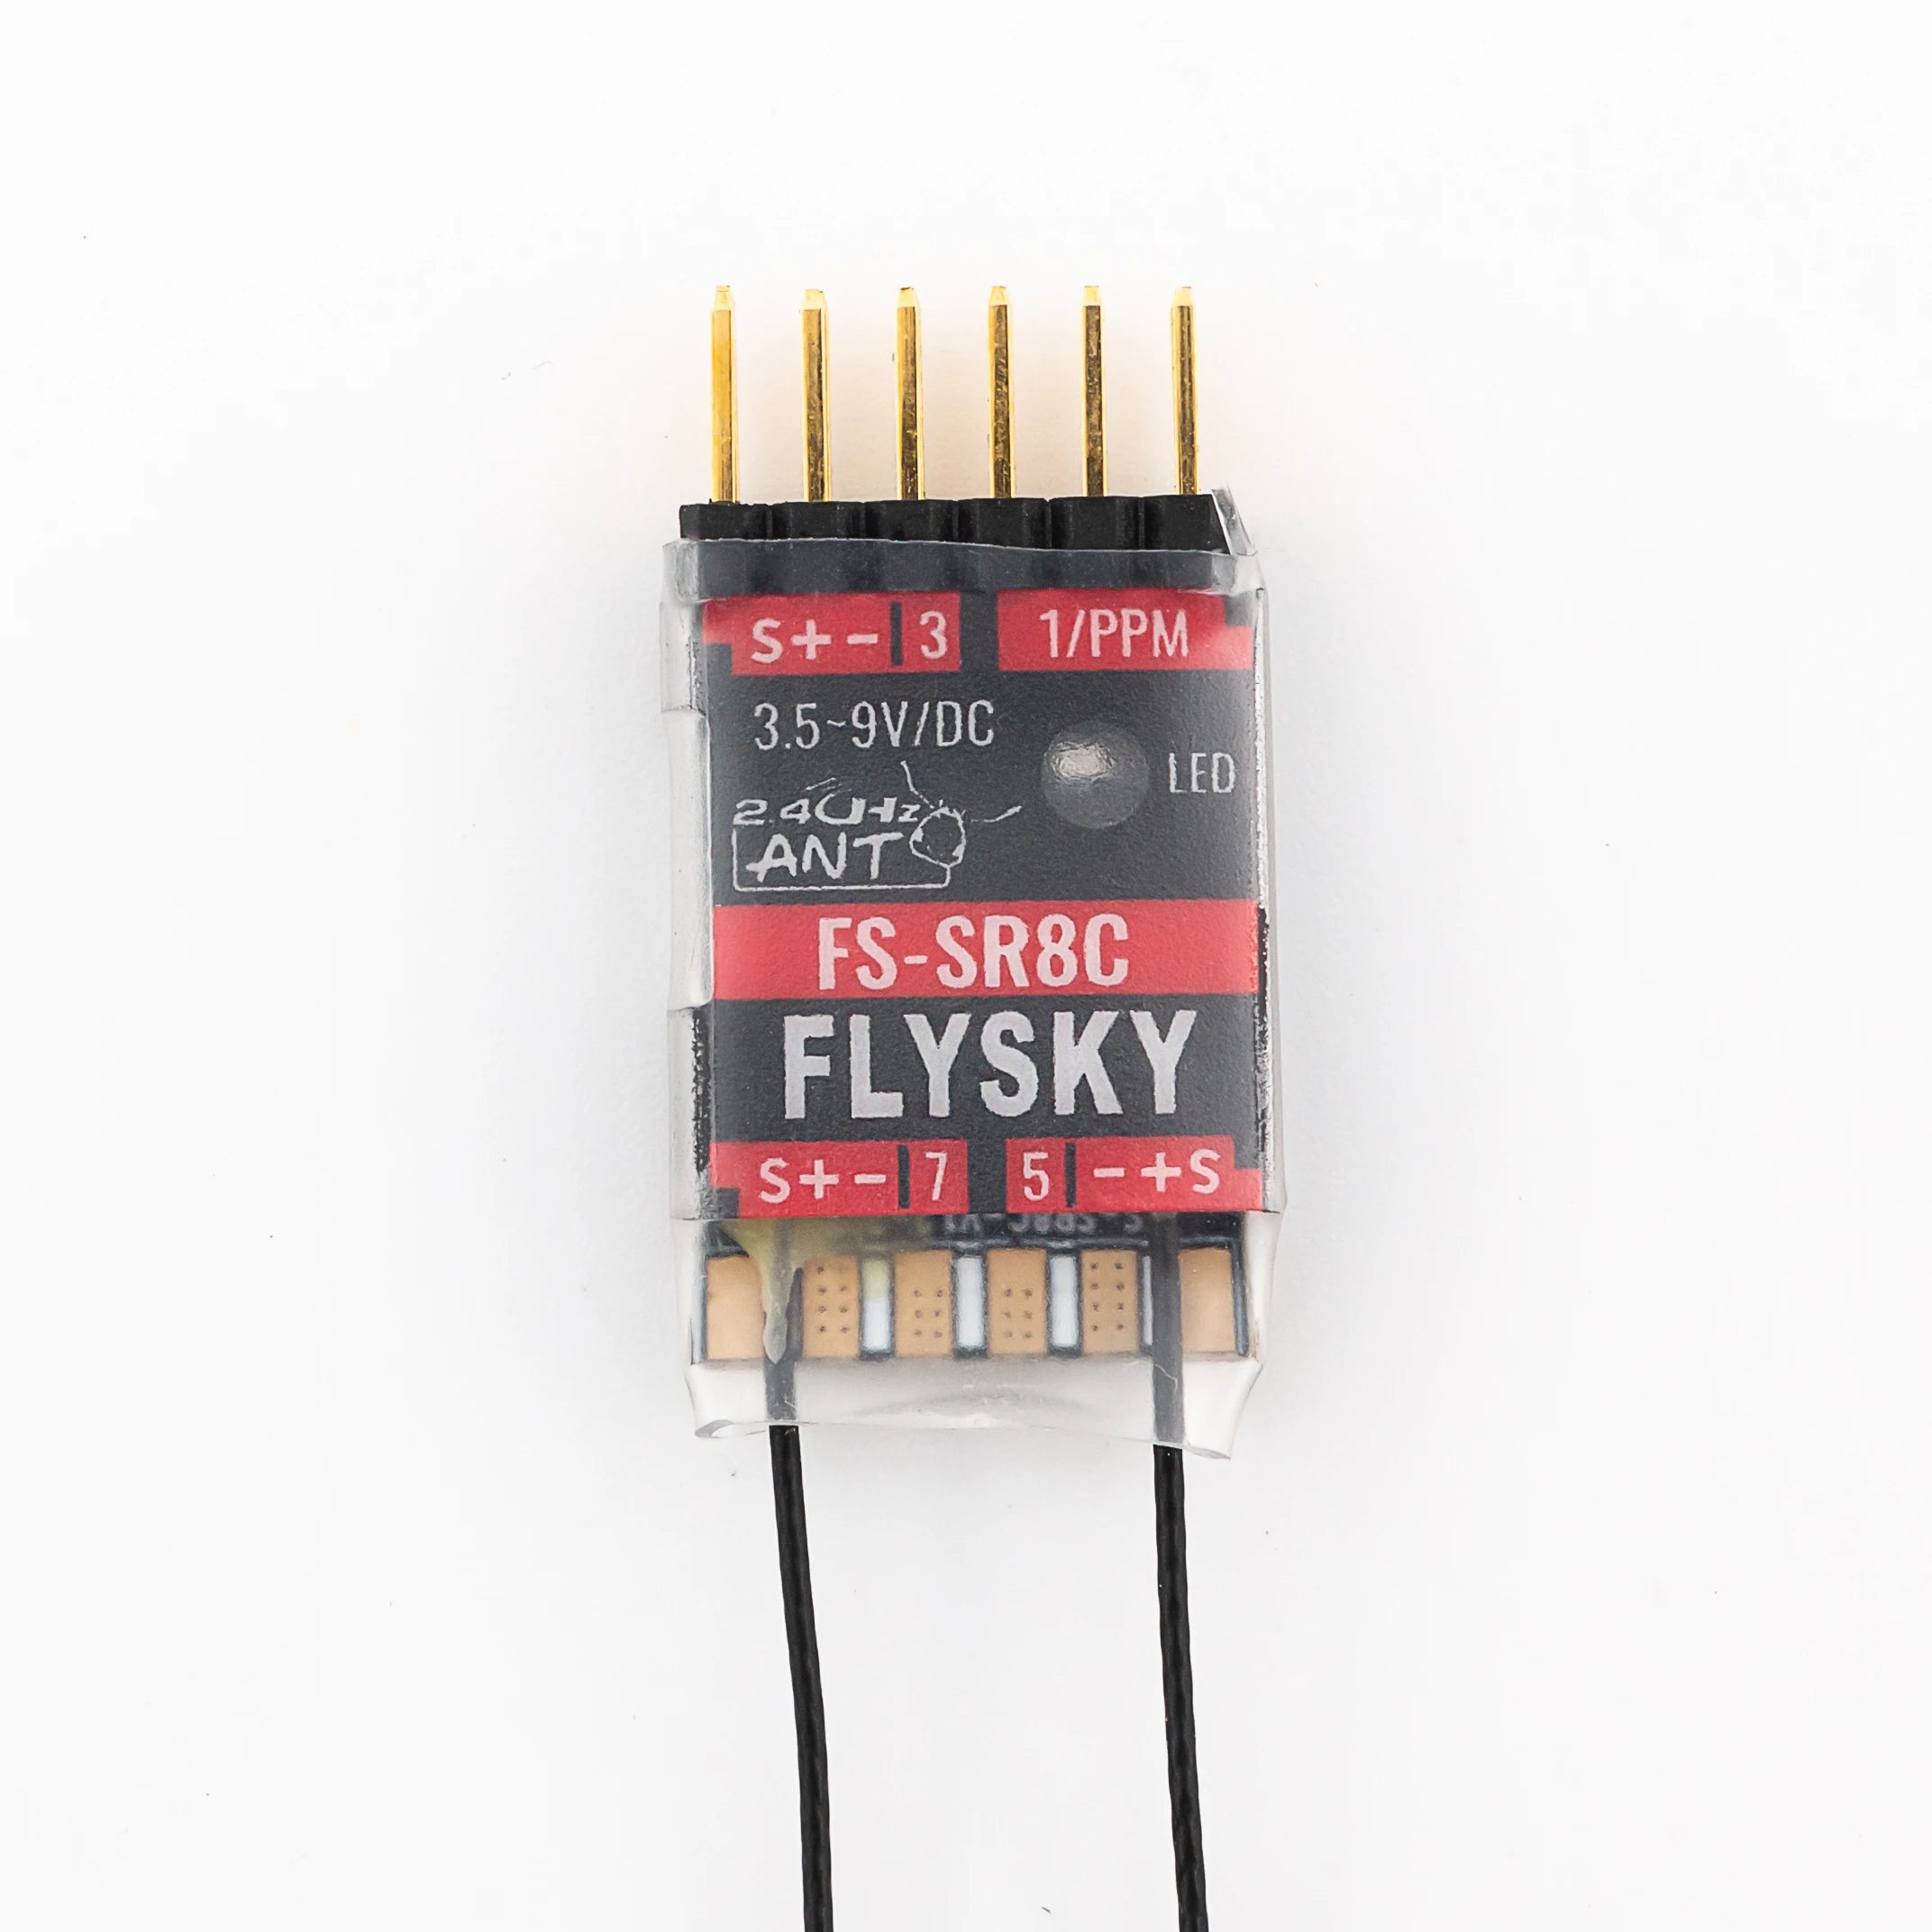 FLYSKY FS-SR8C 8 Channels 2.4G Receiver, S+-[3 I/PPM 3.5-9V/DC LEO 24U